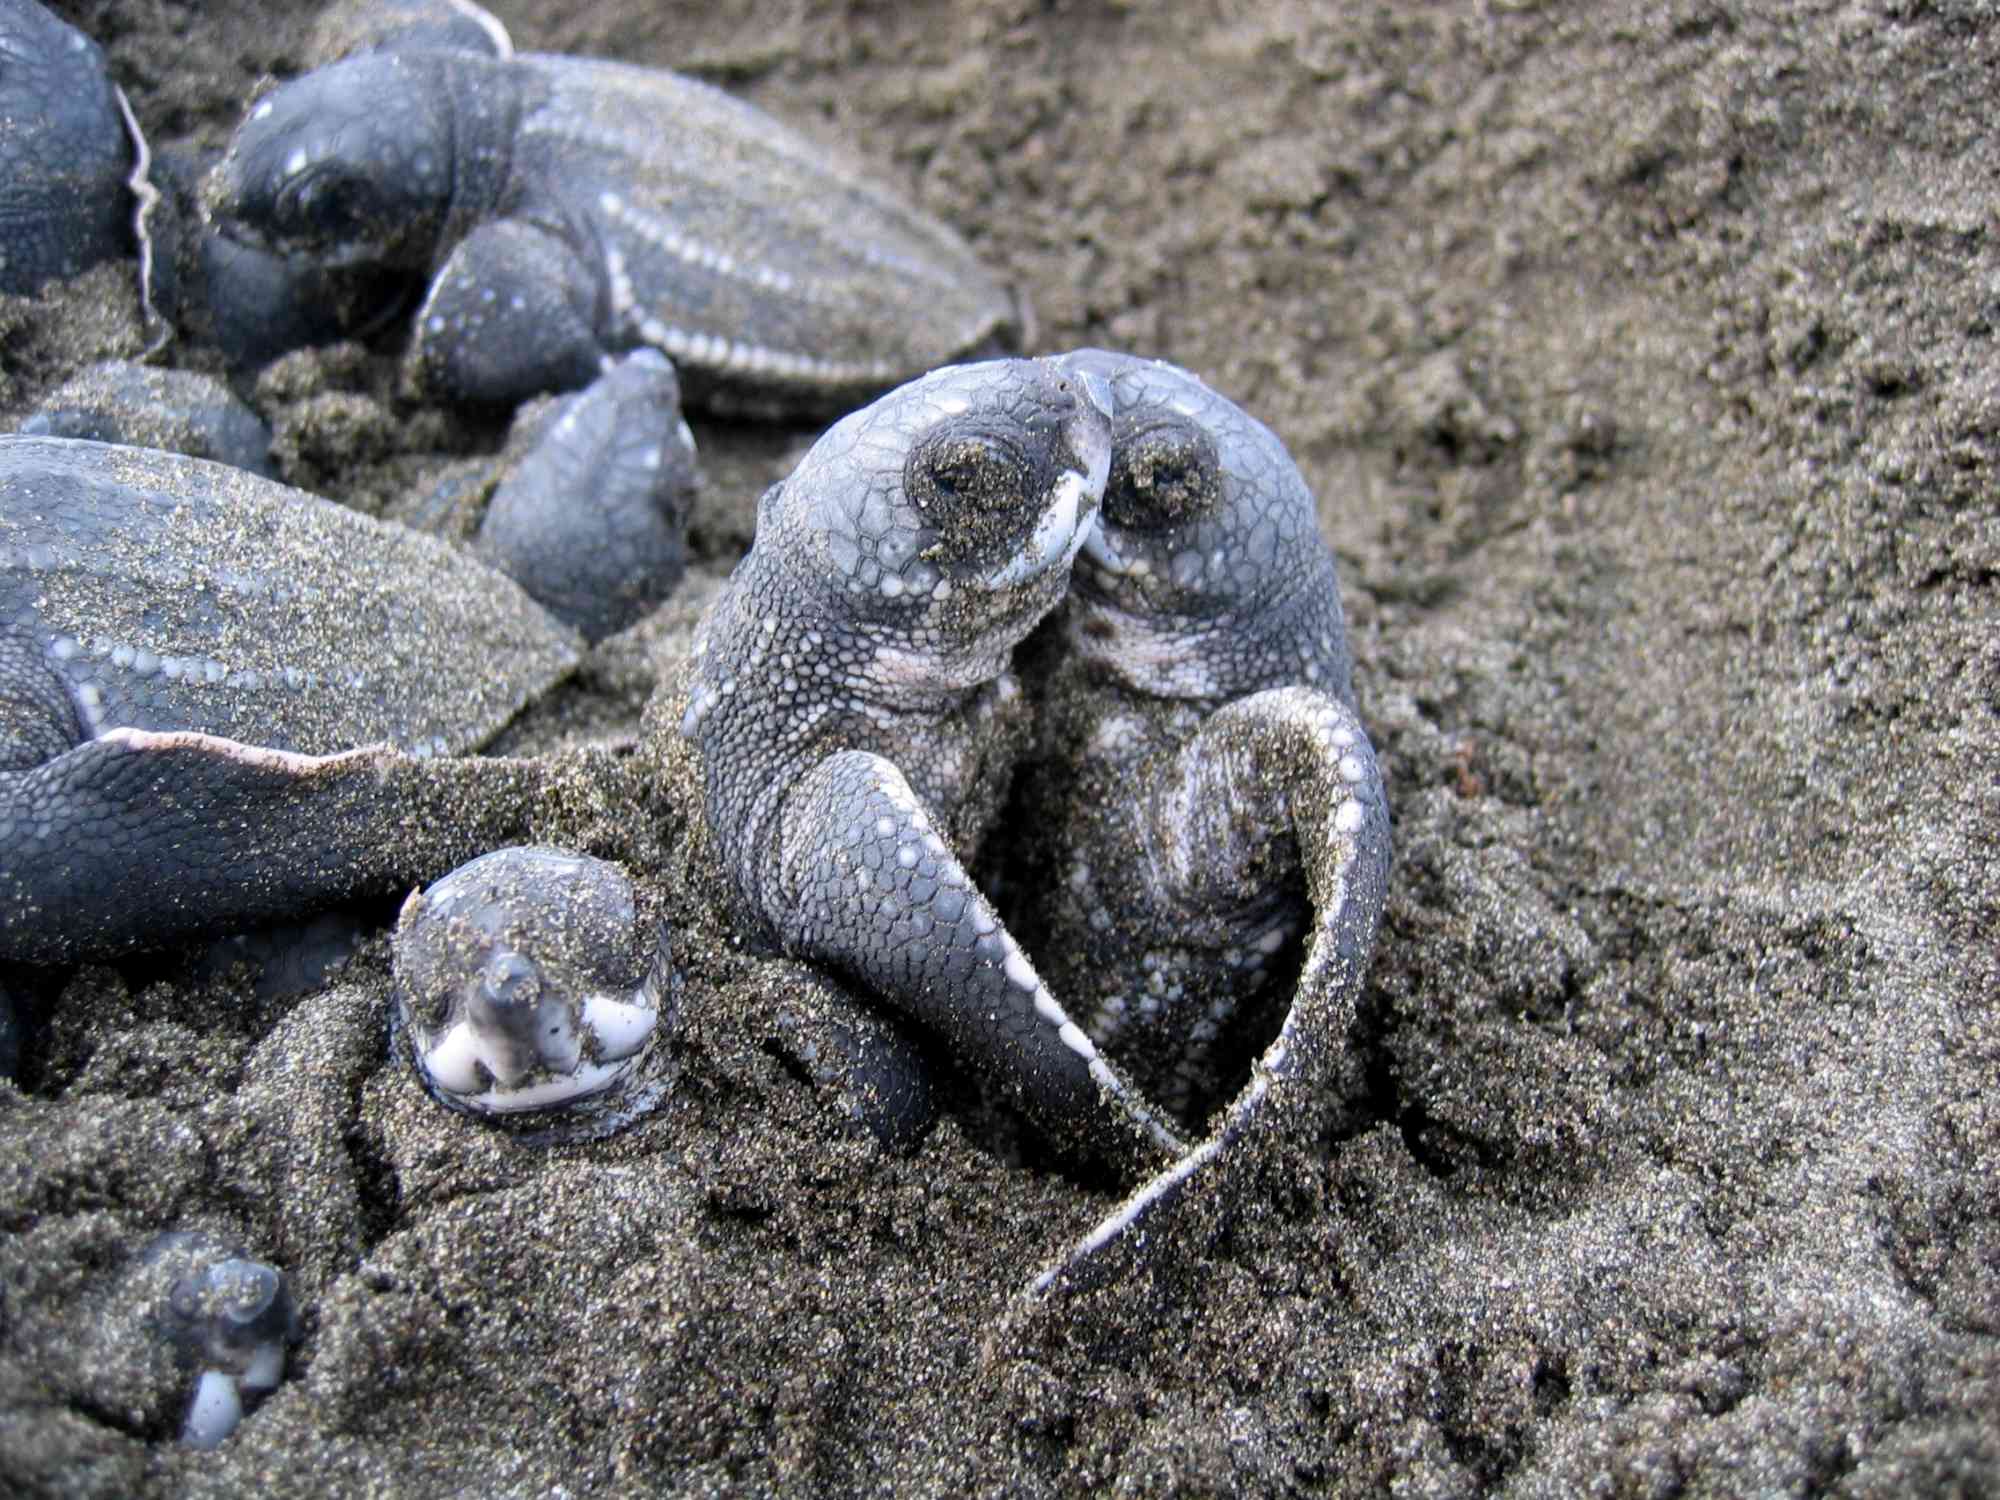 Leatherback sea turtle (Dermochelys coriacea) hatchlings emerging Limon, Costa Rica